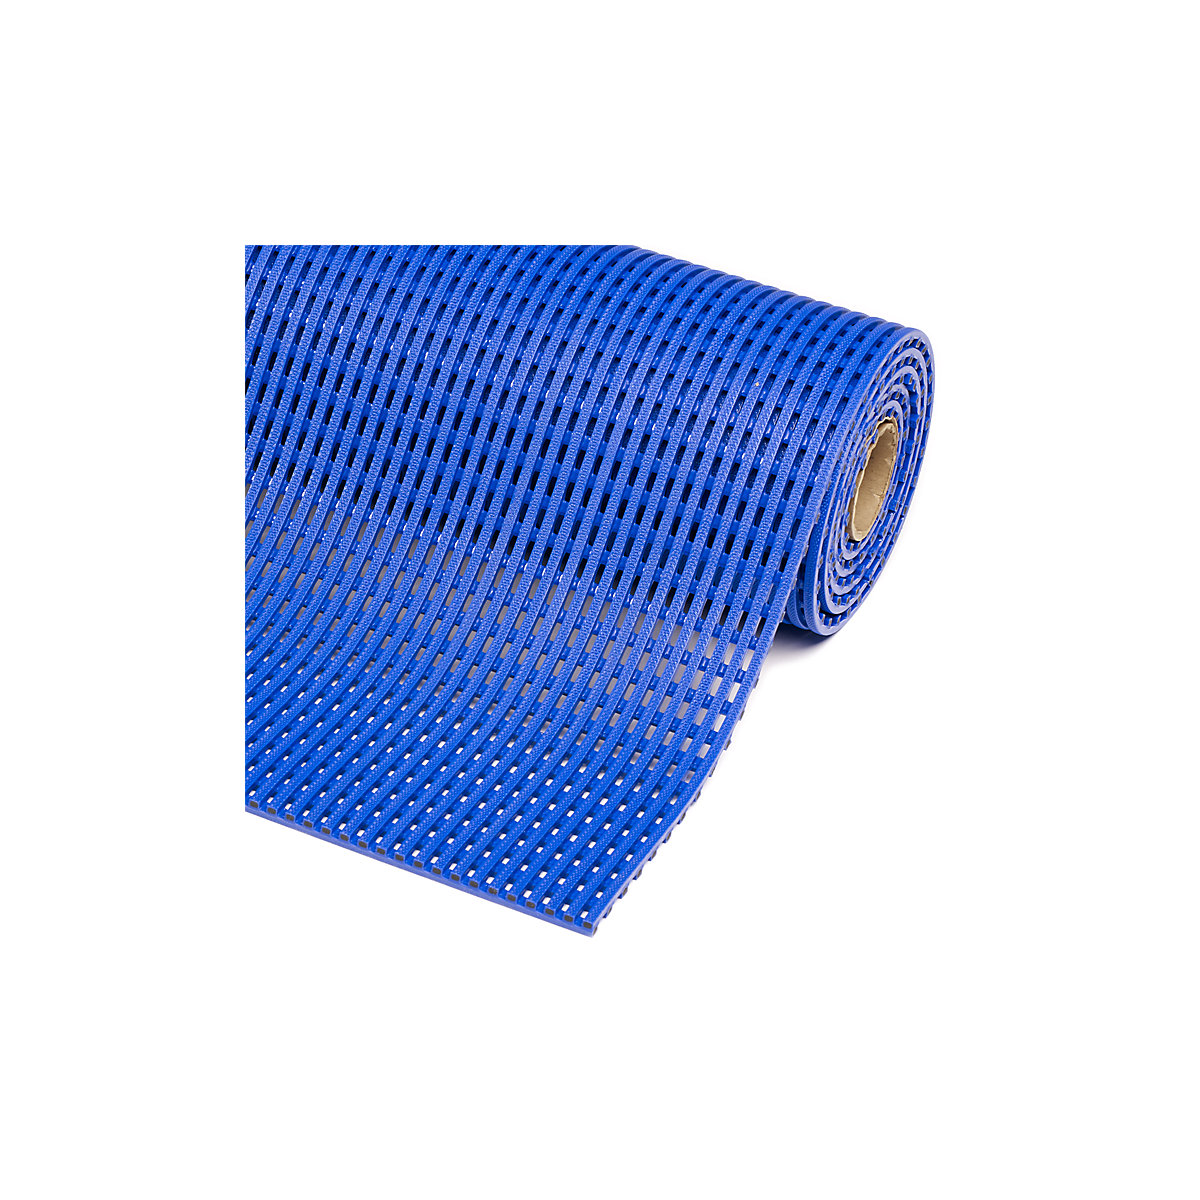 Protuklizna prostirka, PVC – NOTRAX, širina 900 mm, po dužnom metru, u plavoj boji-4